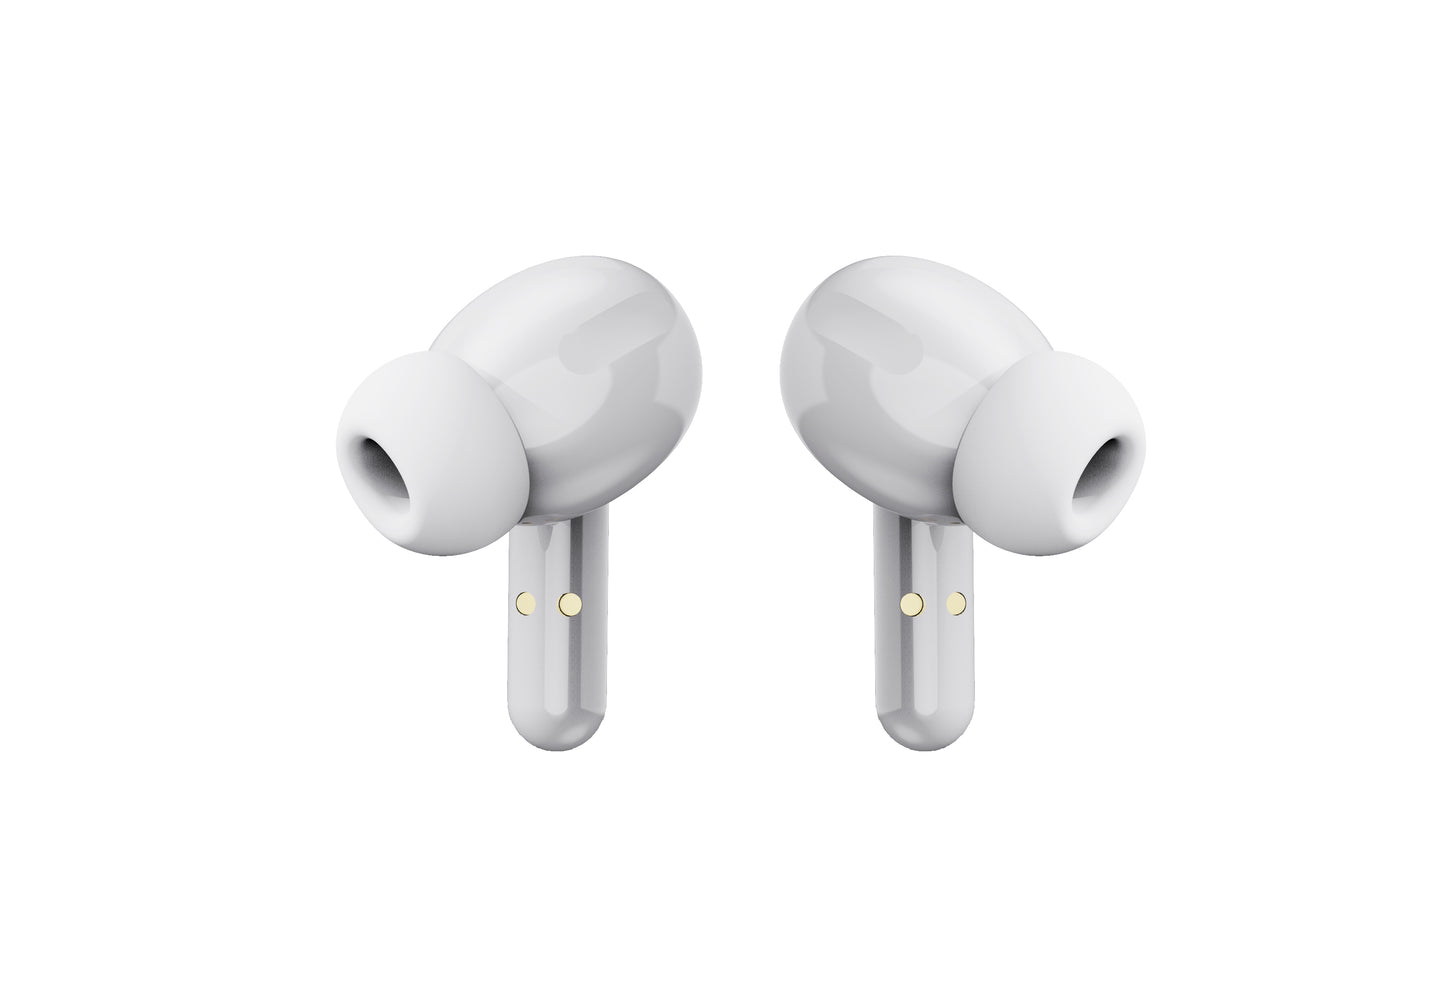 Headphones Denver TWE-38, White - Wireless Bluetooth and Comfort